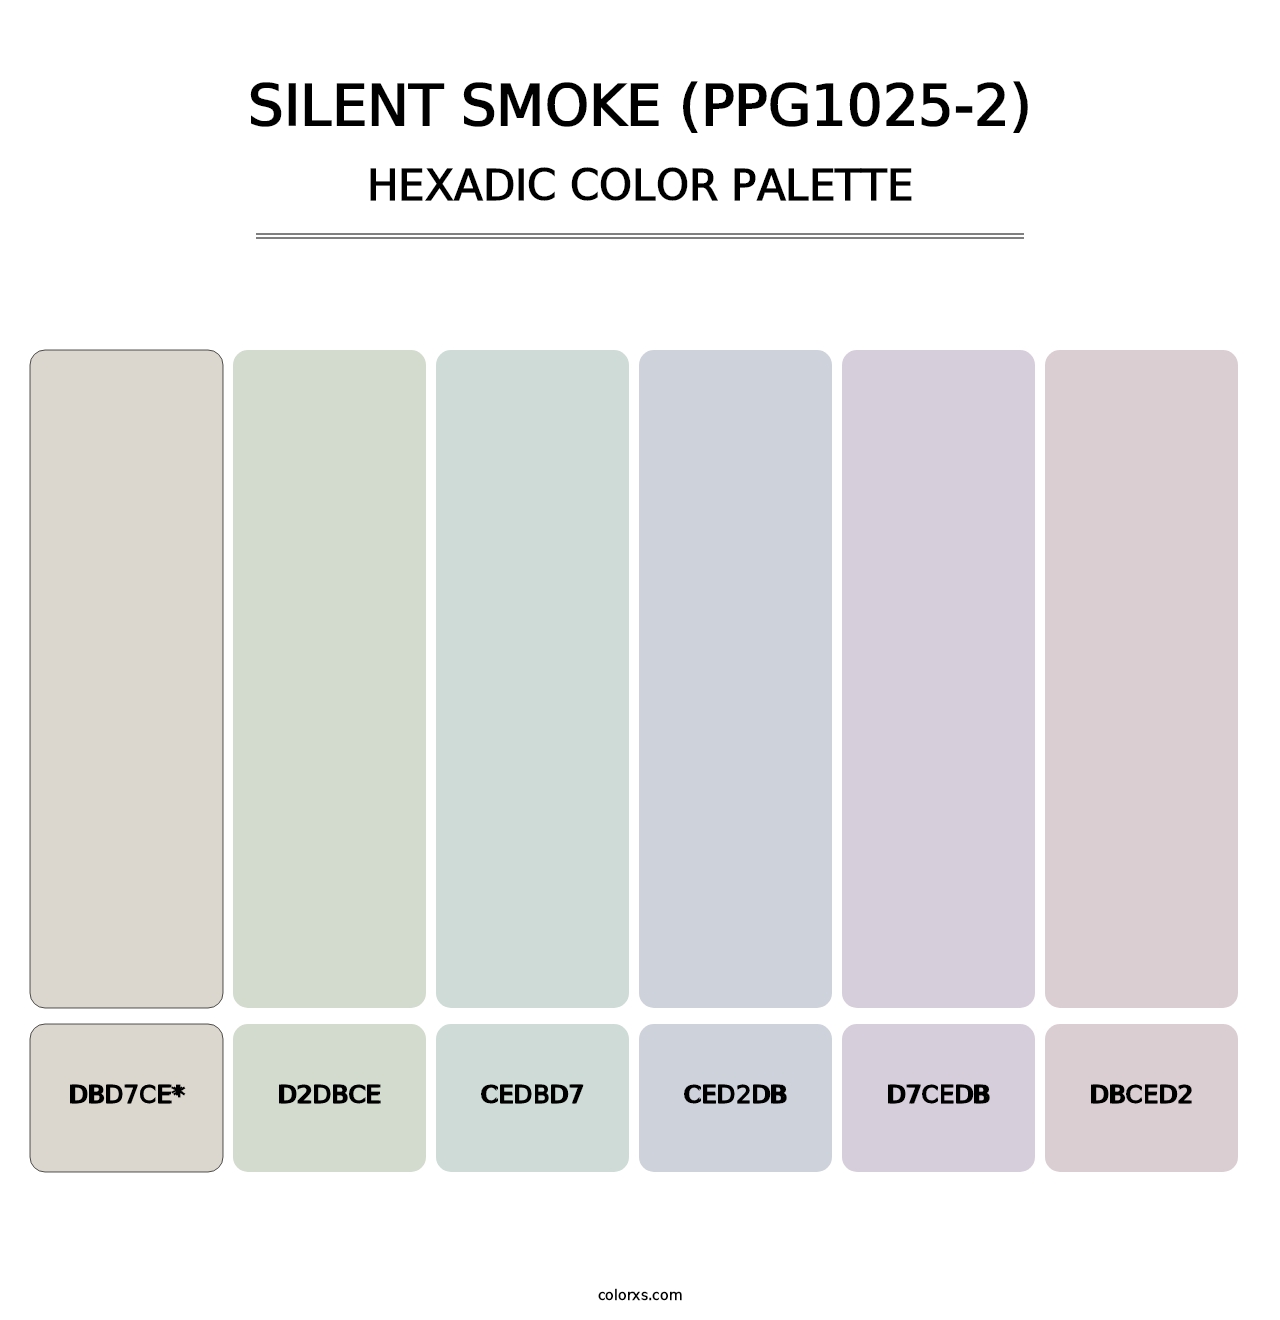 Silent Smoke (PPG1025-2) - Hexadic Color Palette